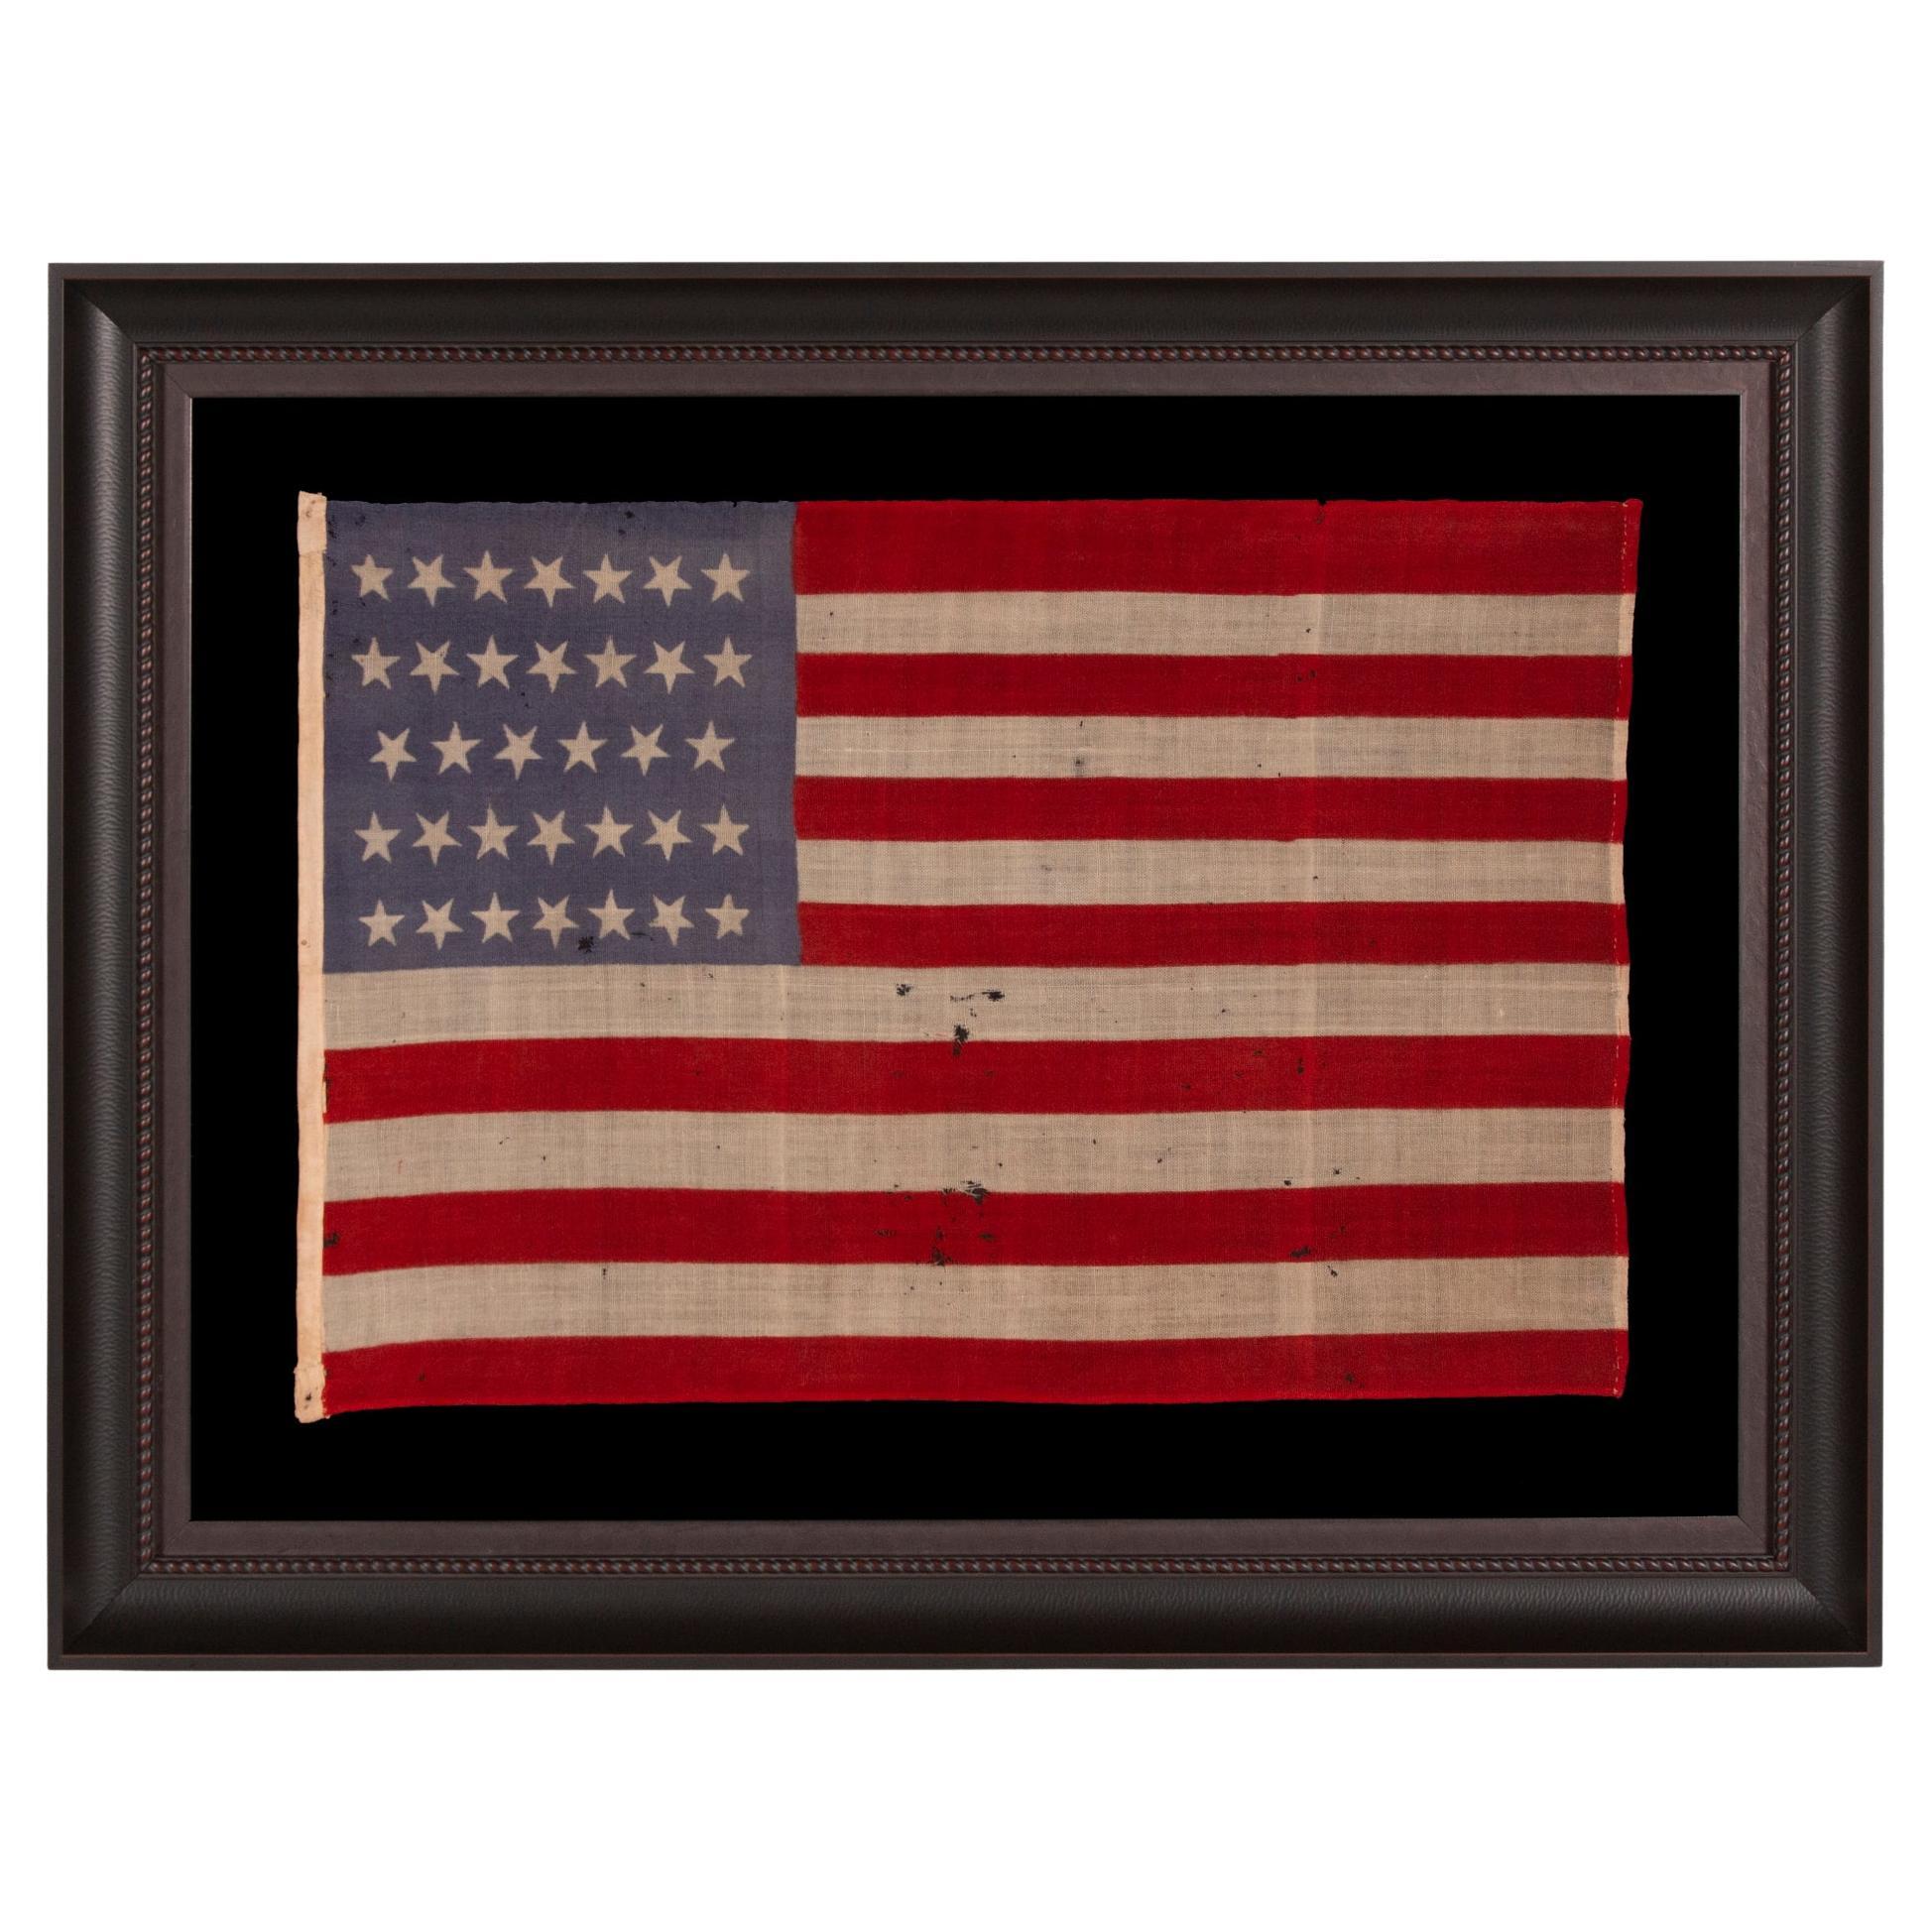 34 TUMBLING STARS auf einem ANTIQUE AMERICAN FLAG, CIVIL WARPeriode, 1861-63, KANSAS